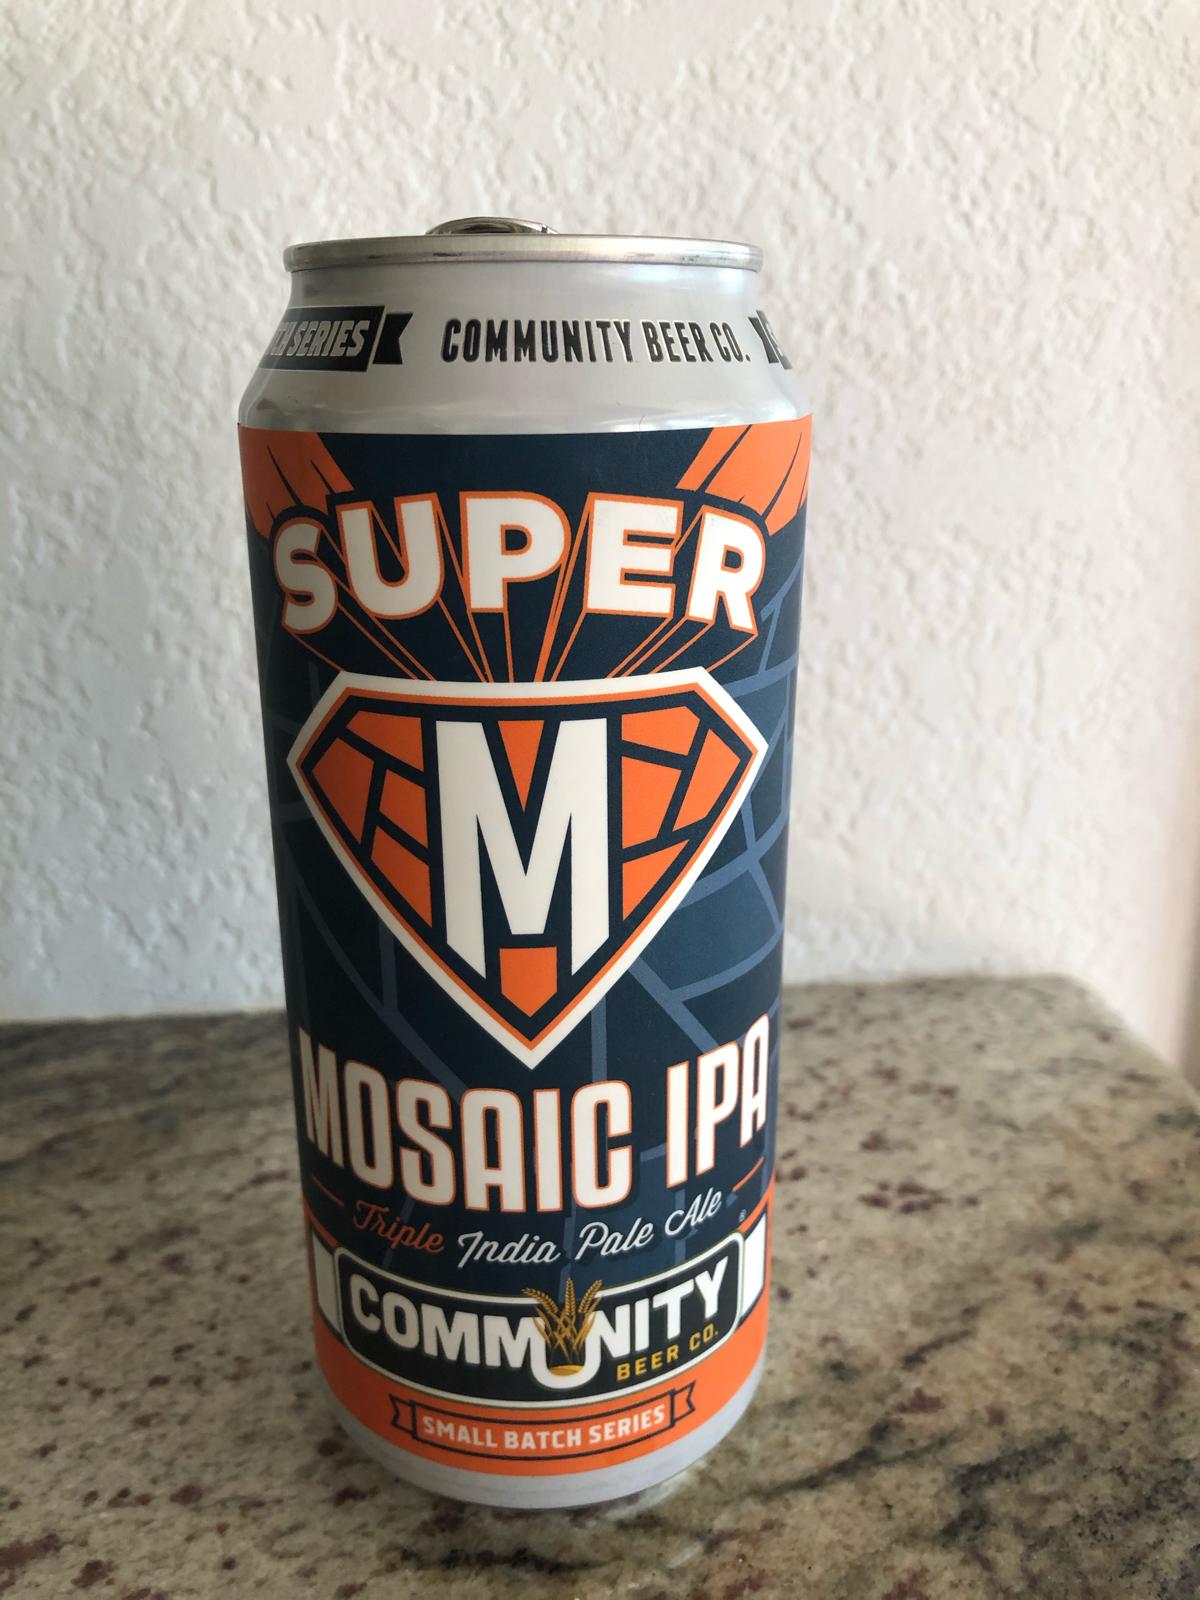 Super Mosaic IPA